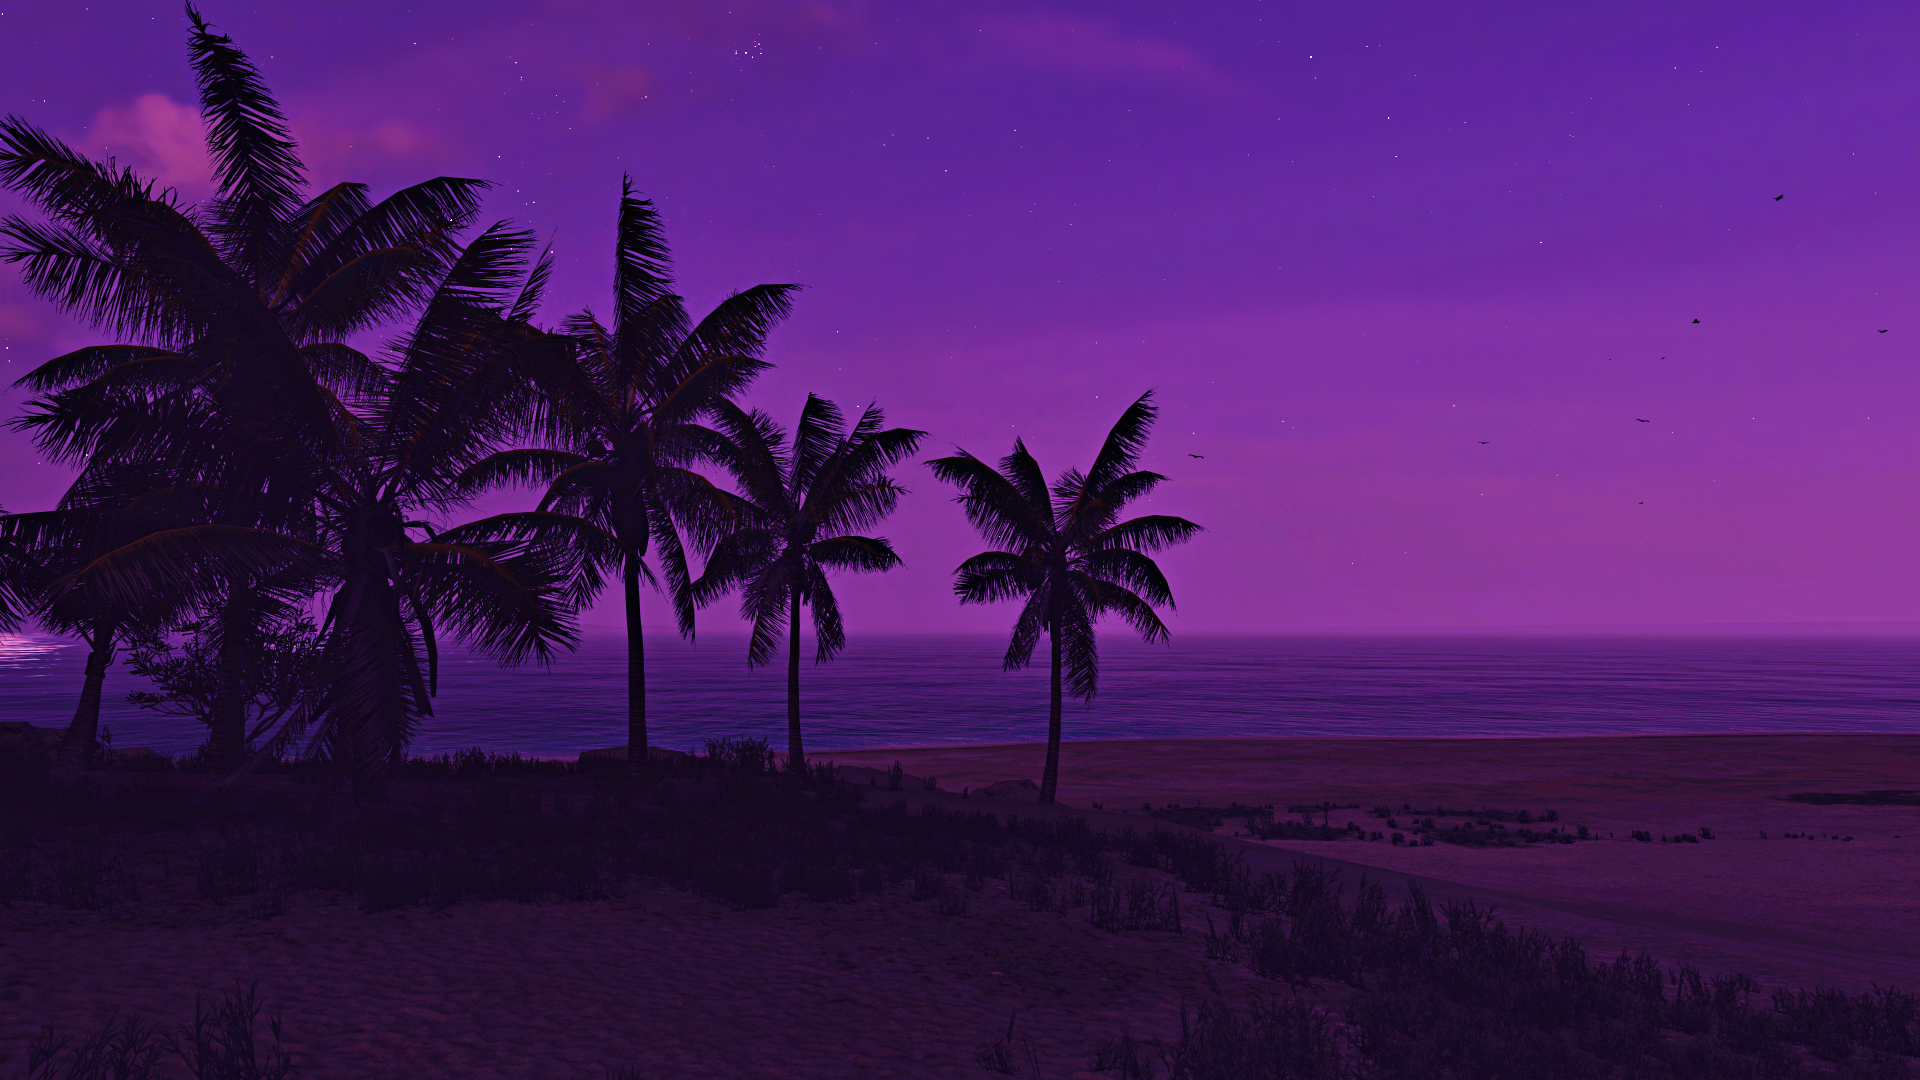 General 1920x1080 video games Forza Forza Horizon 5 sky sea beach palm trees night purple Turn 10 Studios PlaygroundGames Xbox Game Studios